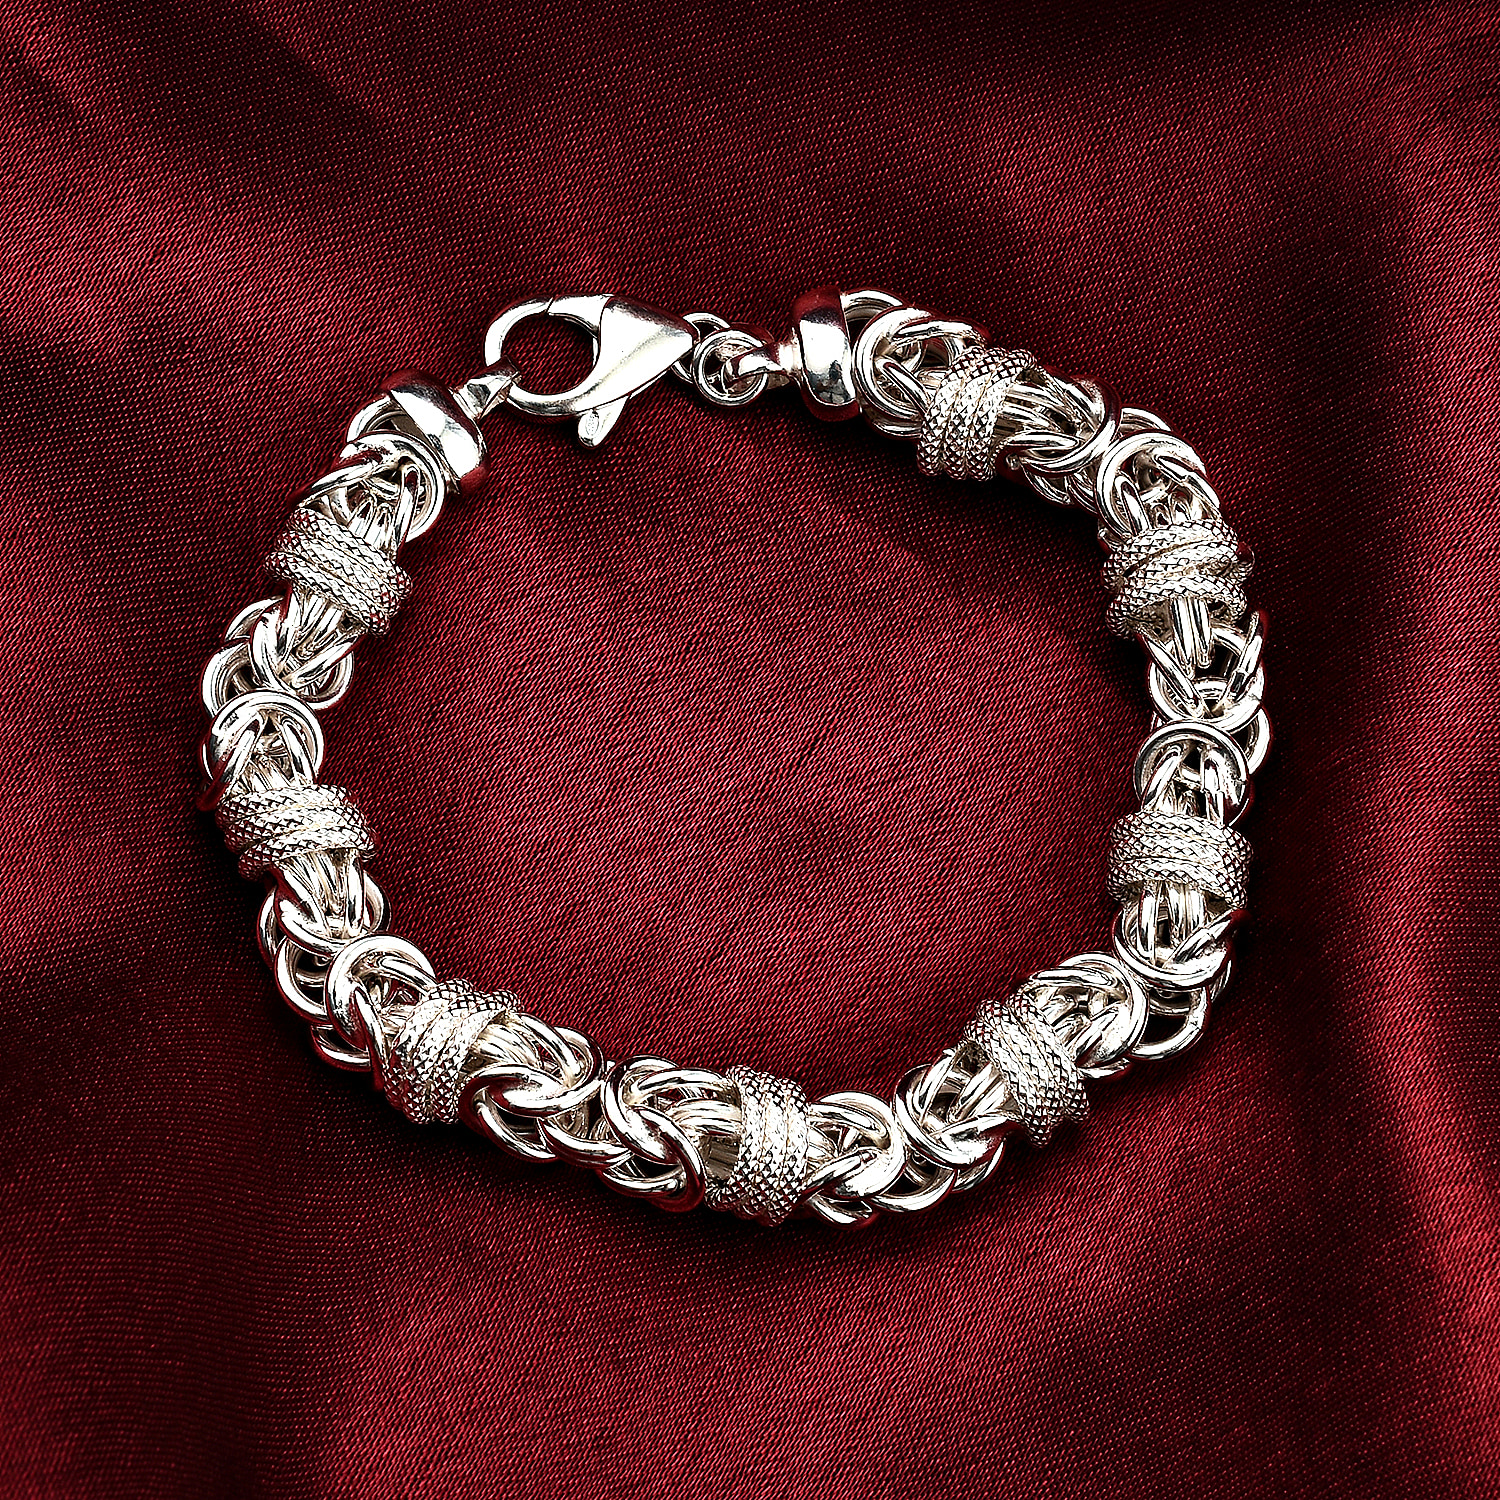 925 silver cord bracelet | online sales on HOLYART.com